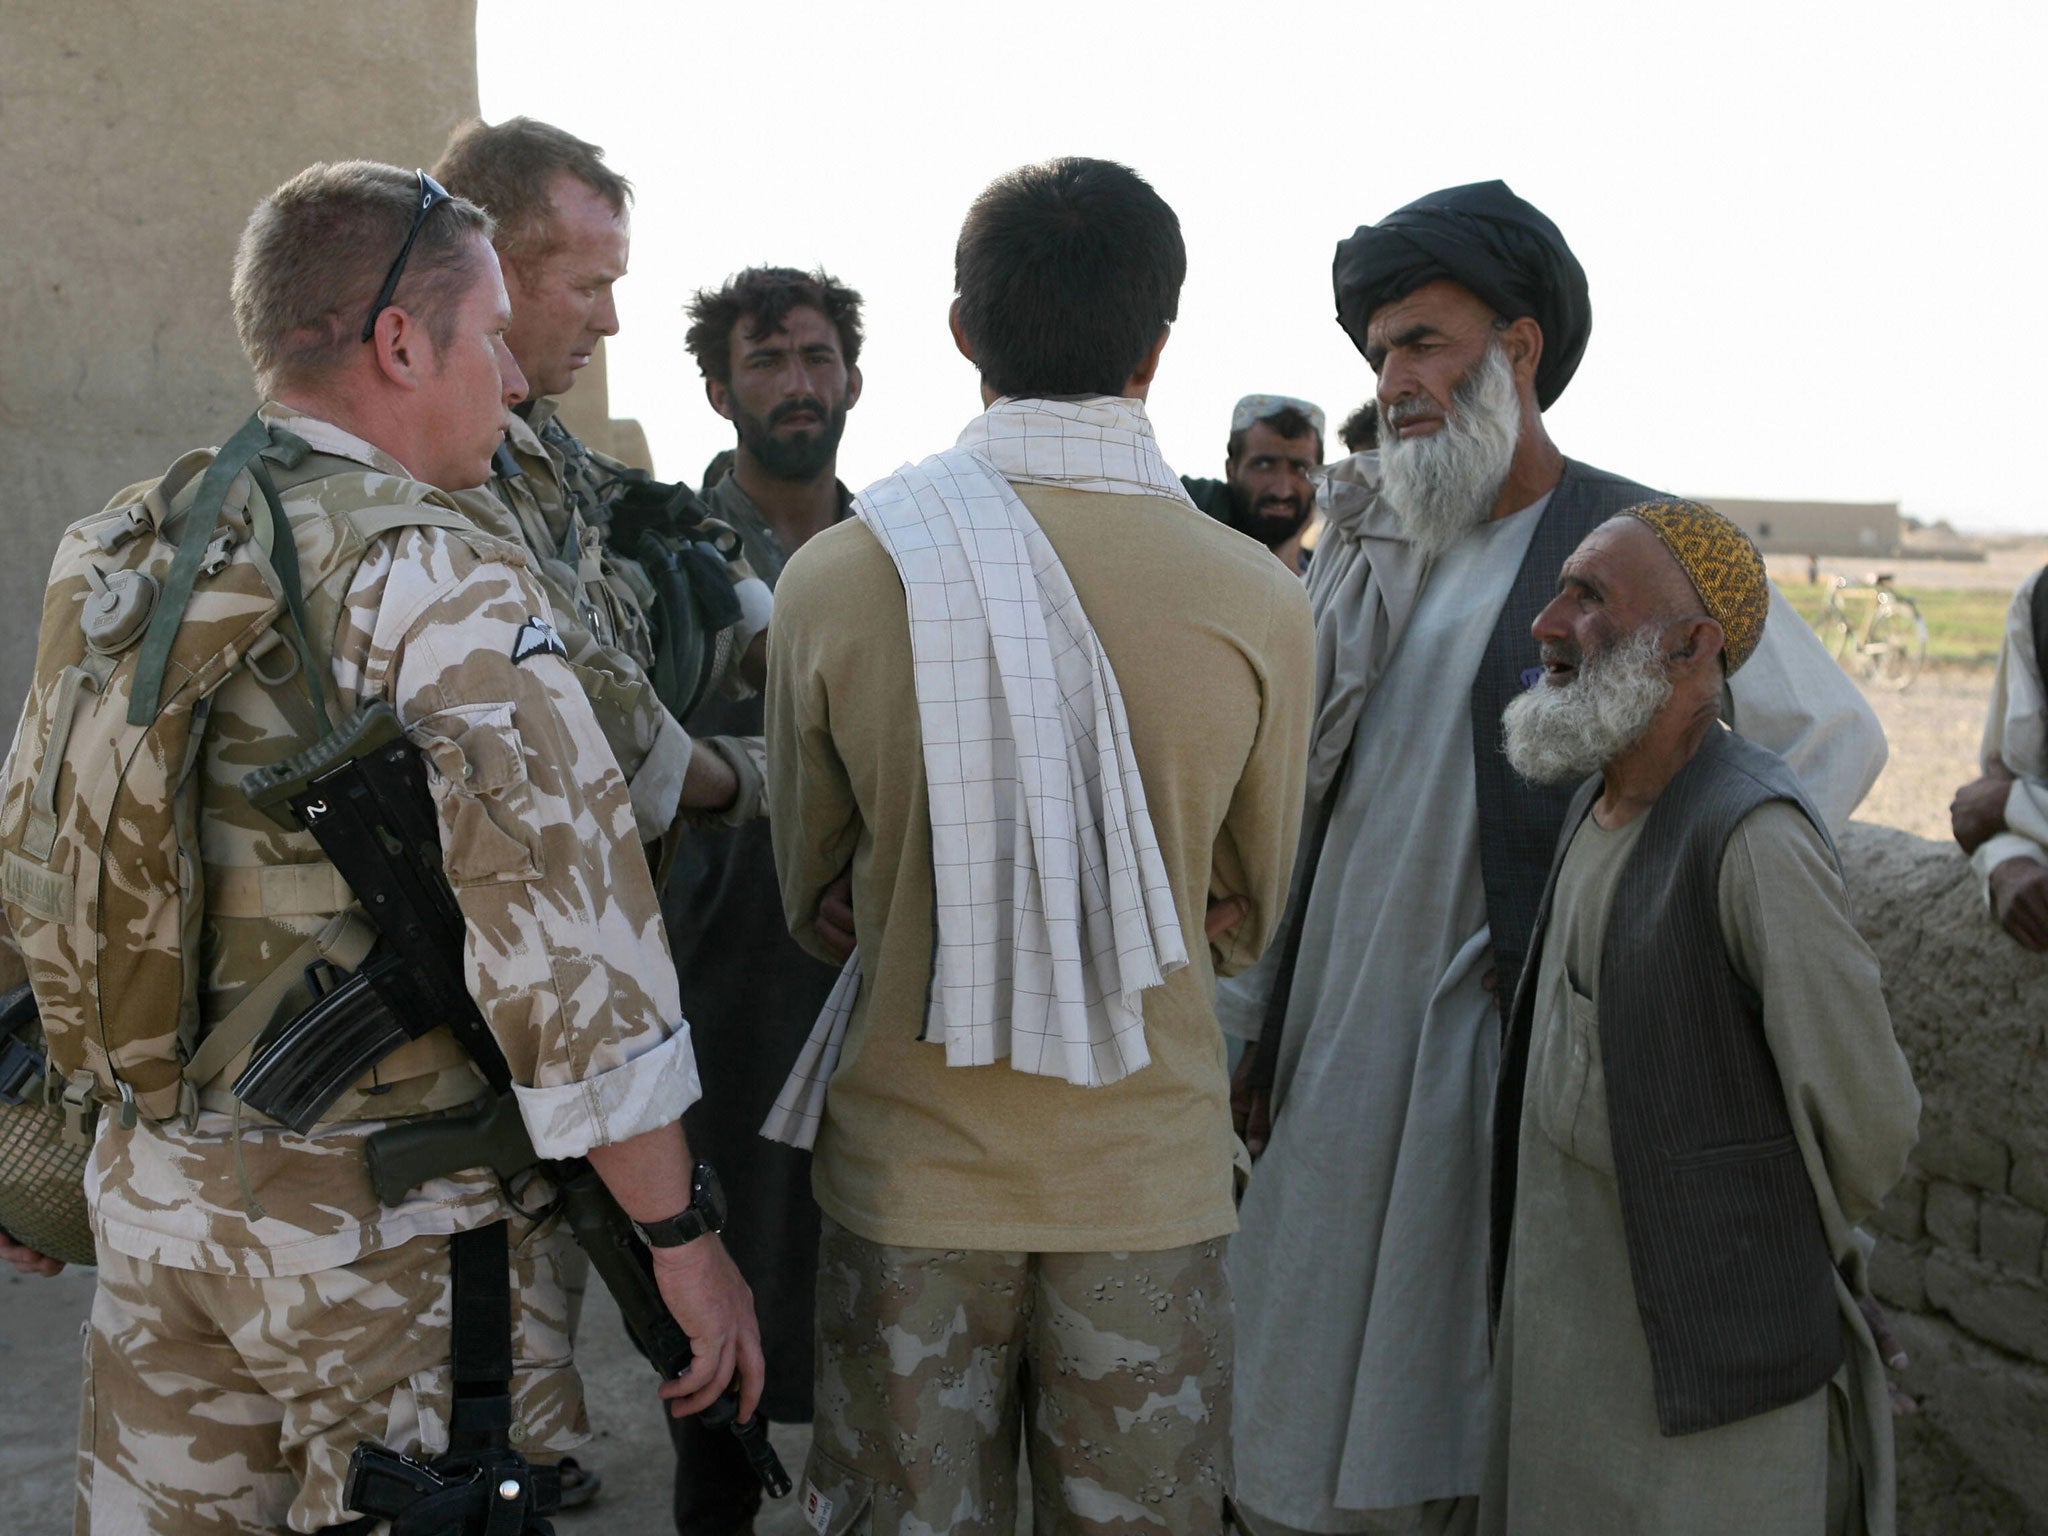 British soldiers in Afghanistan are fighting an 'unwinnable' war